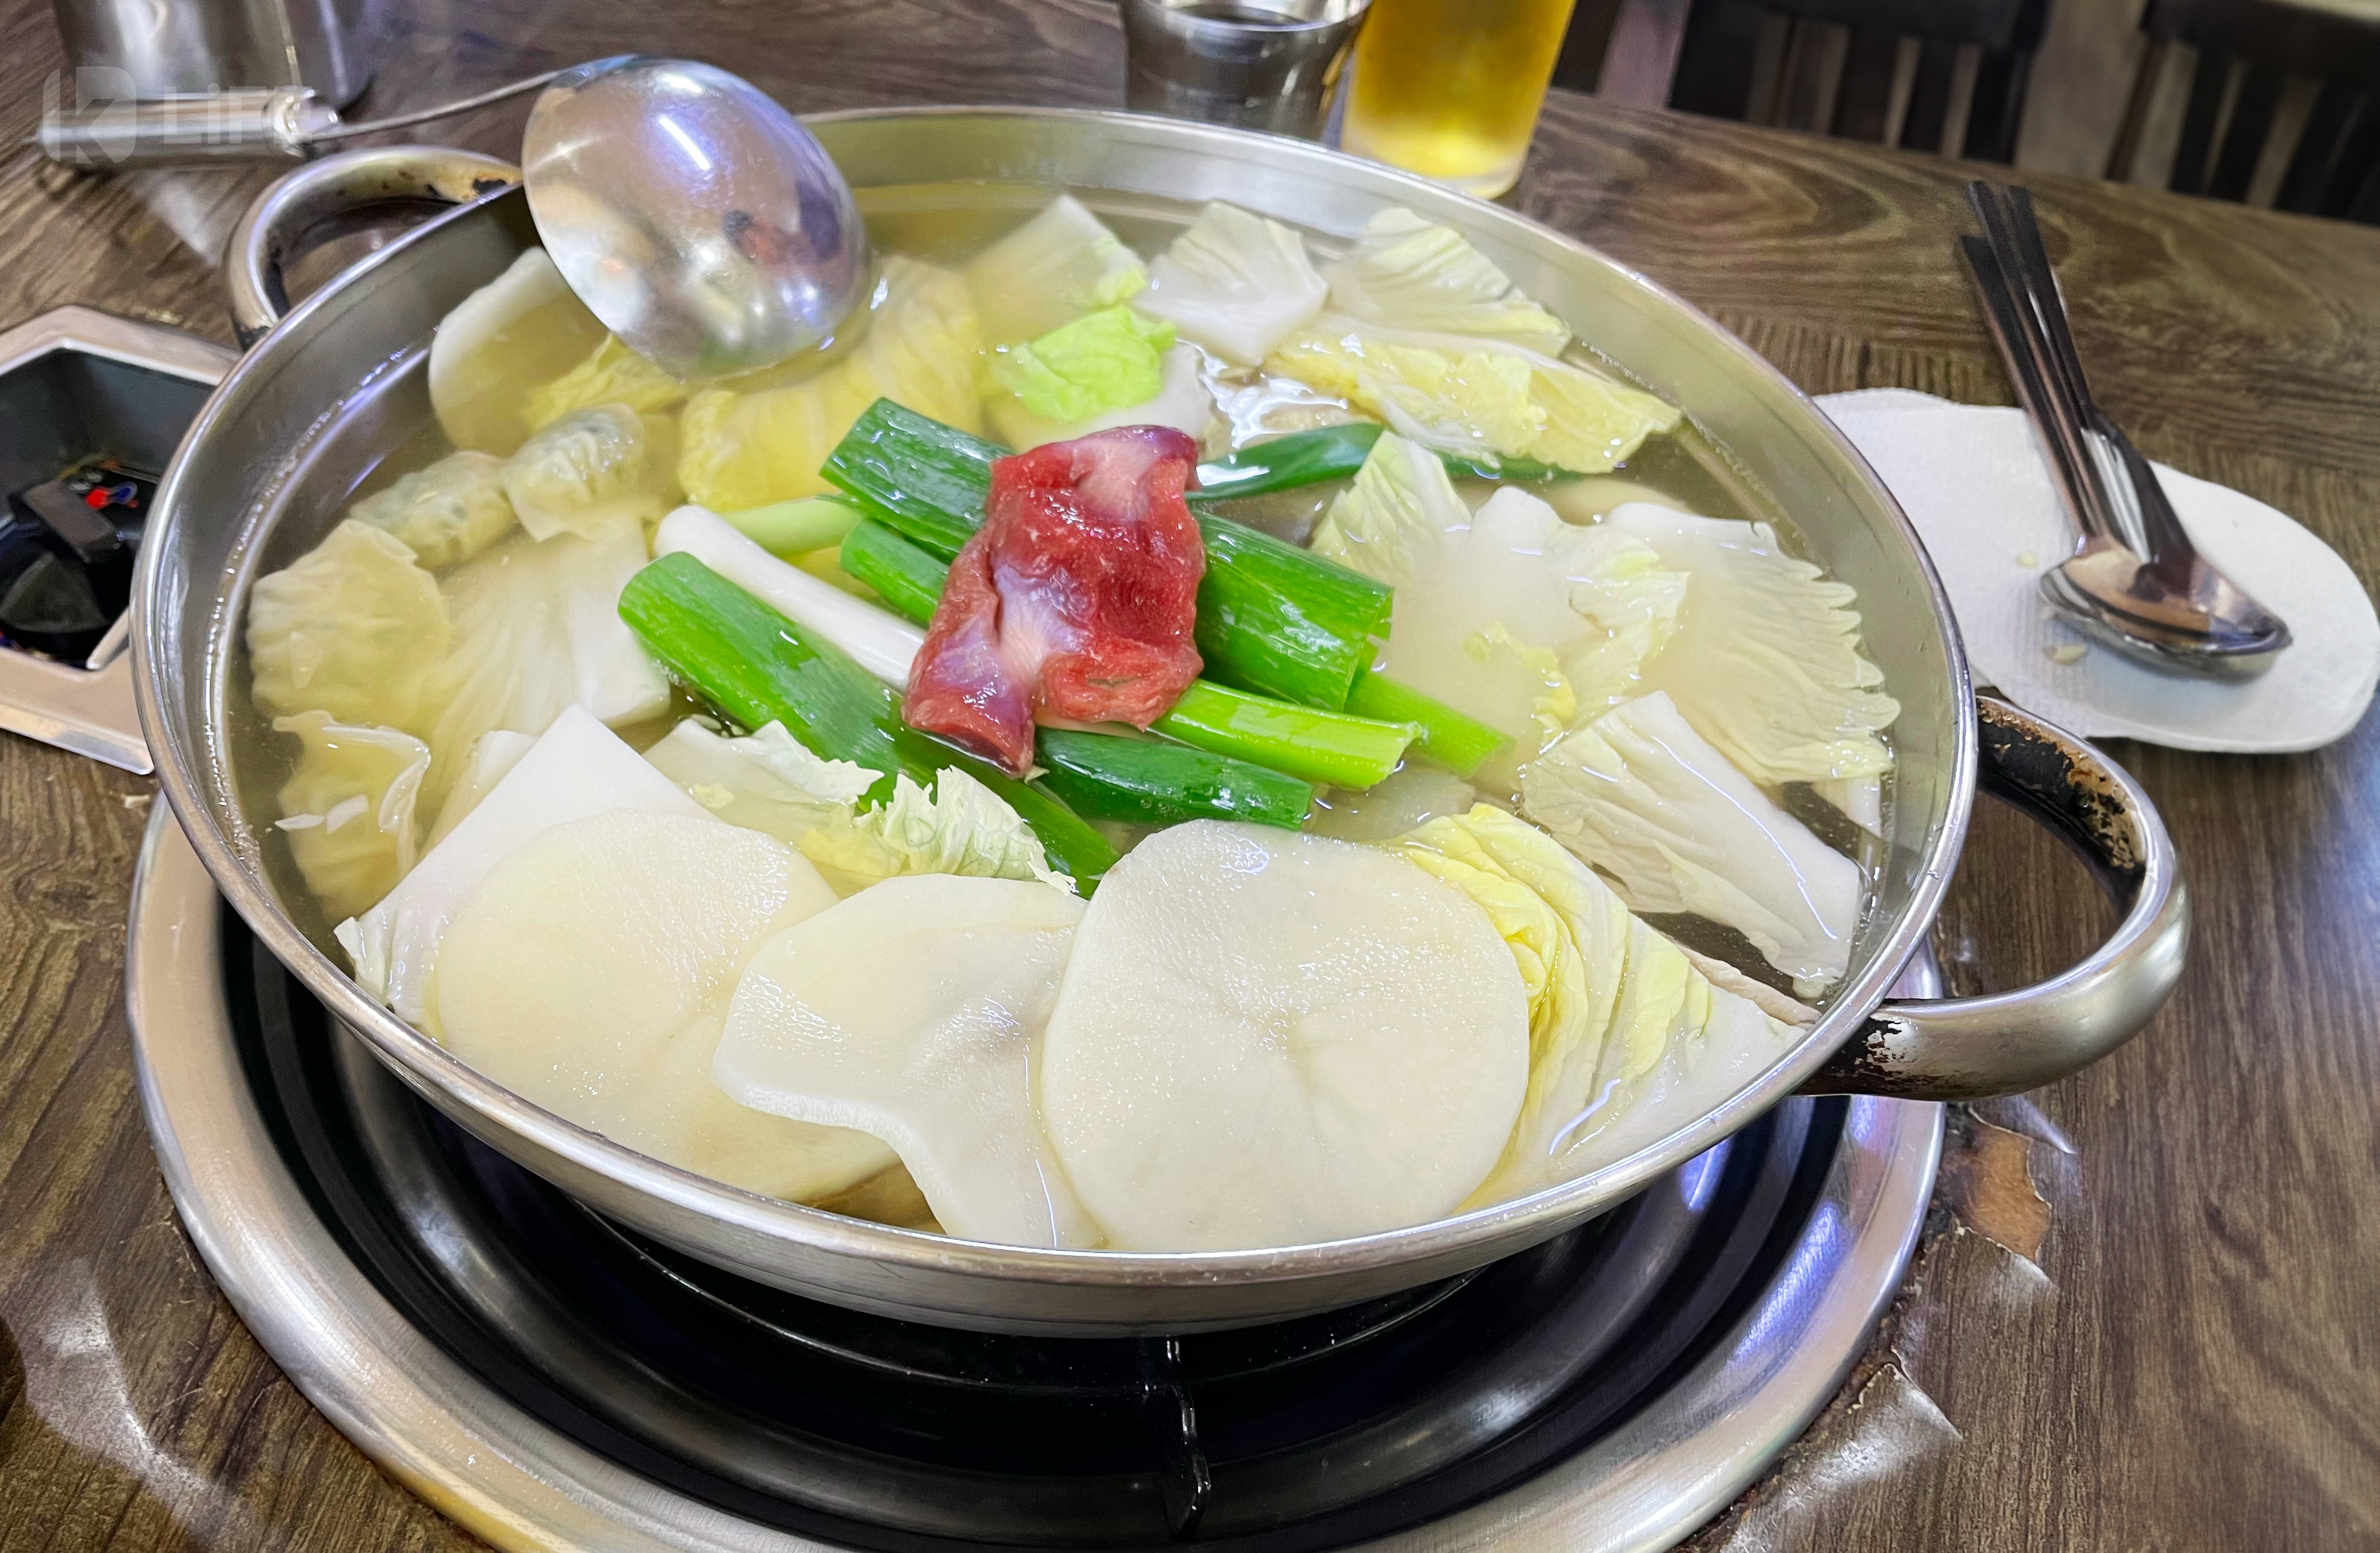 Non-Spicy Korean Food 닭한마리 wm.jpg